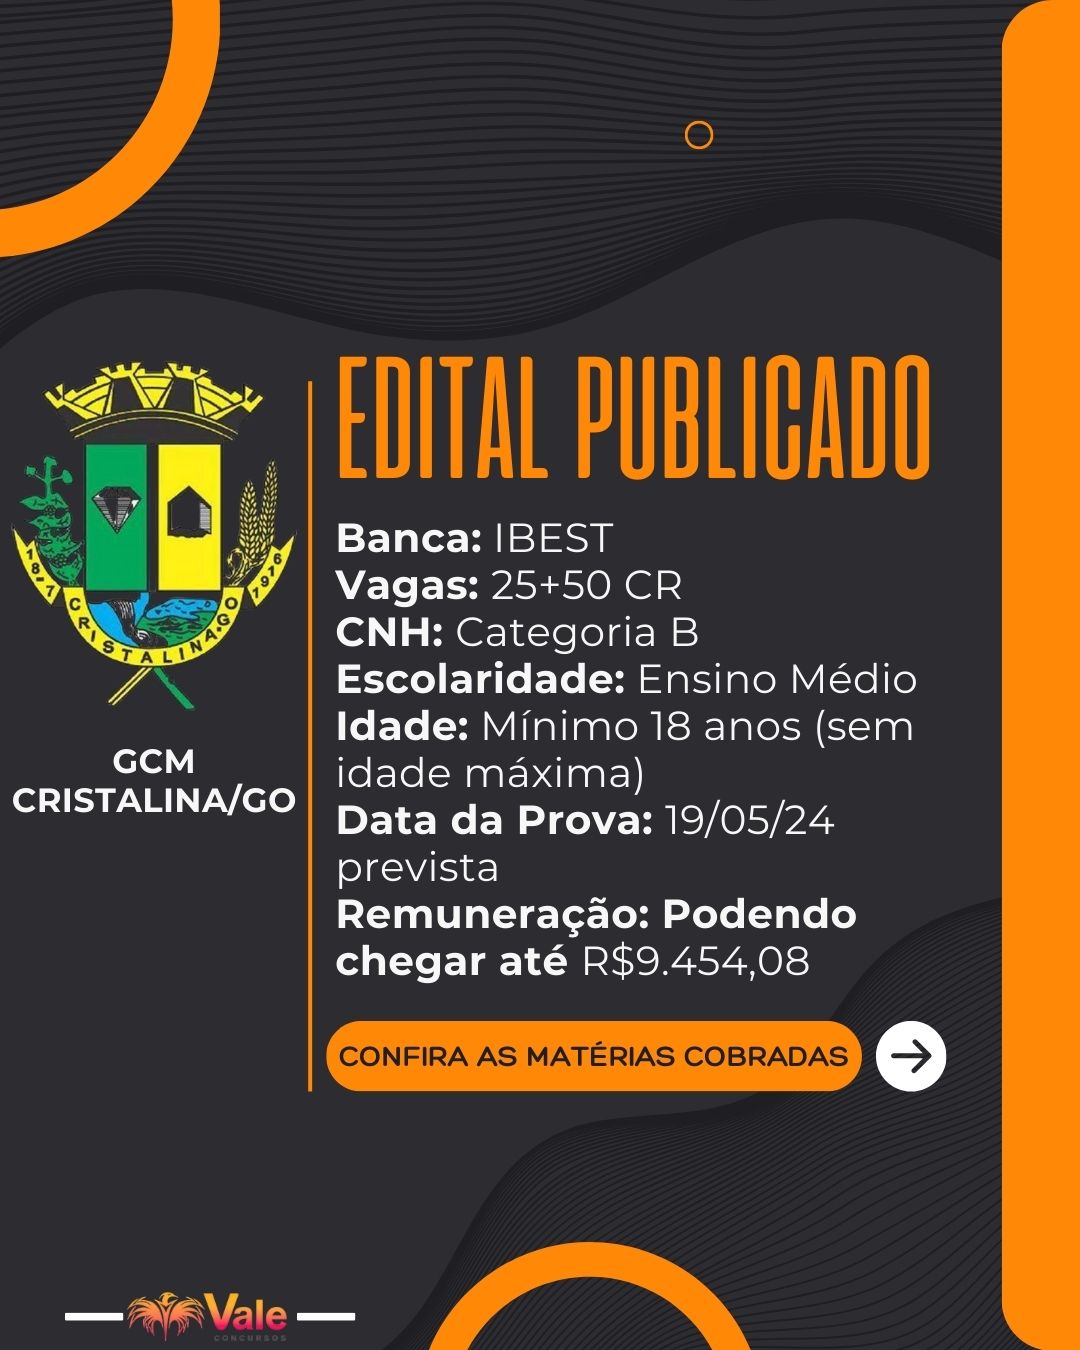 GCM CRISTALINA: EDITAL PUBLICADO